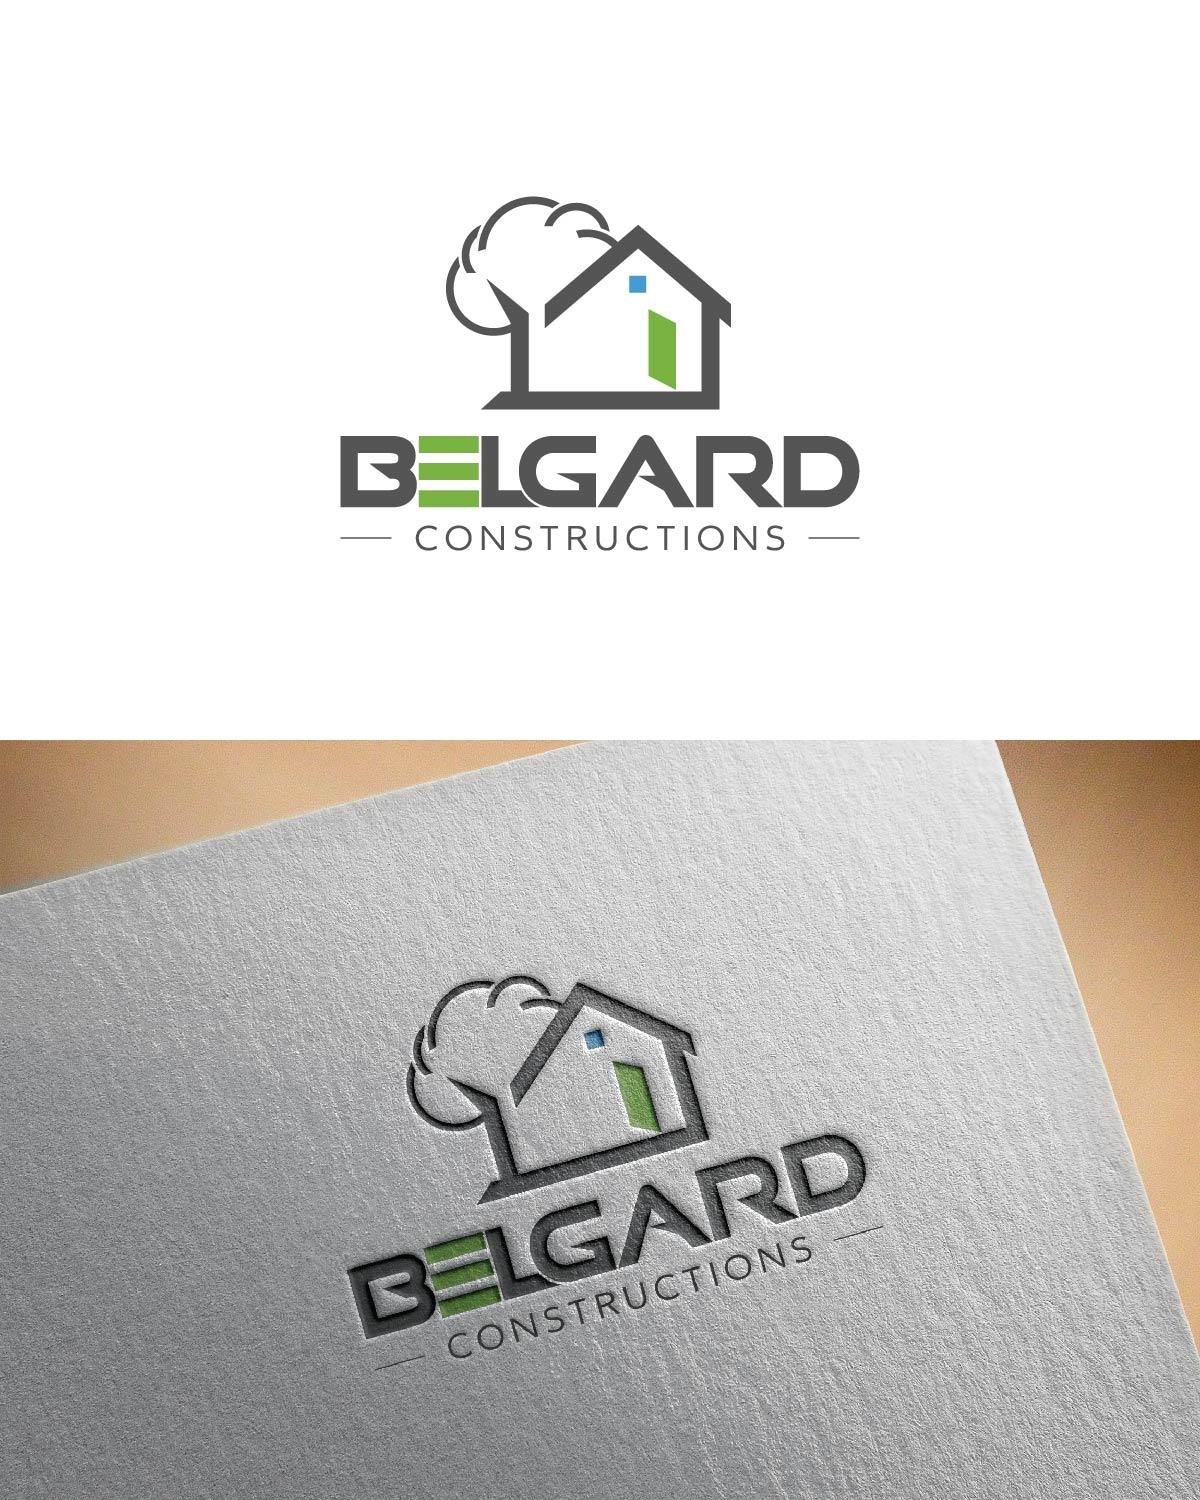 Residential Construction Company Logo